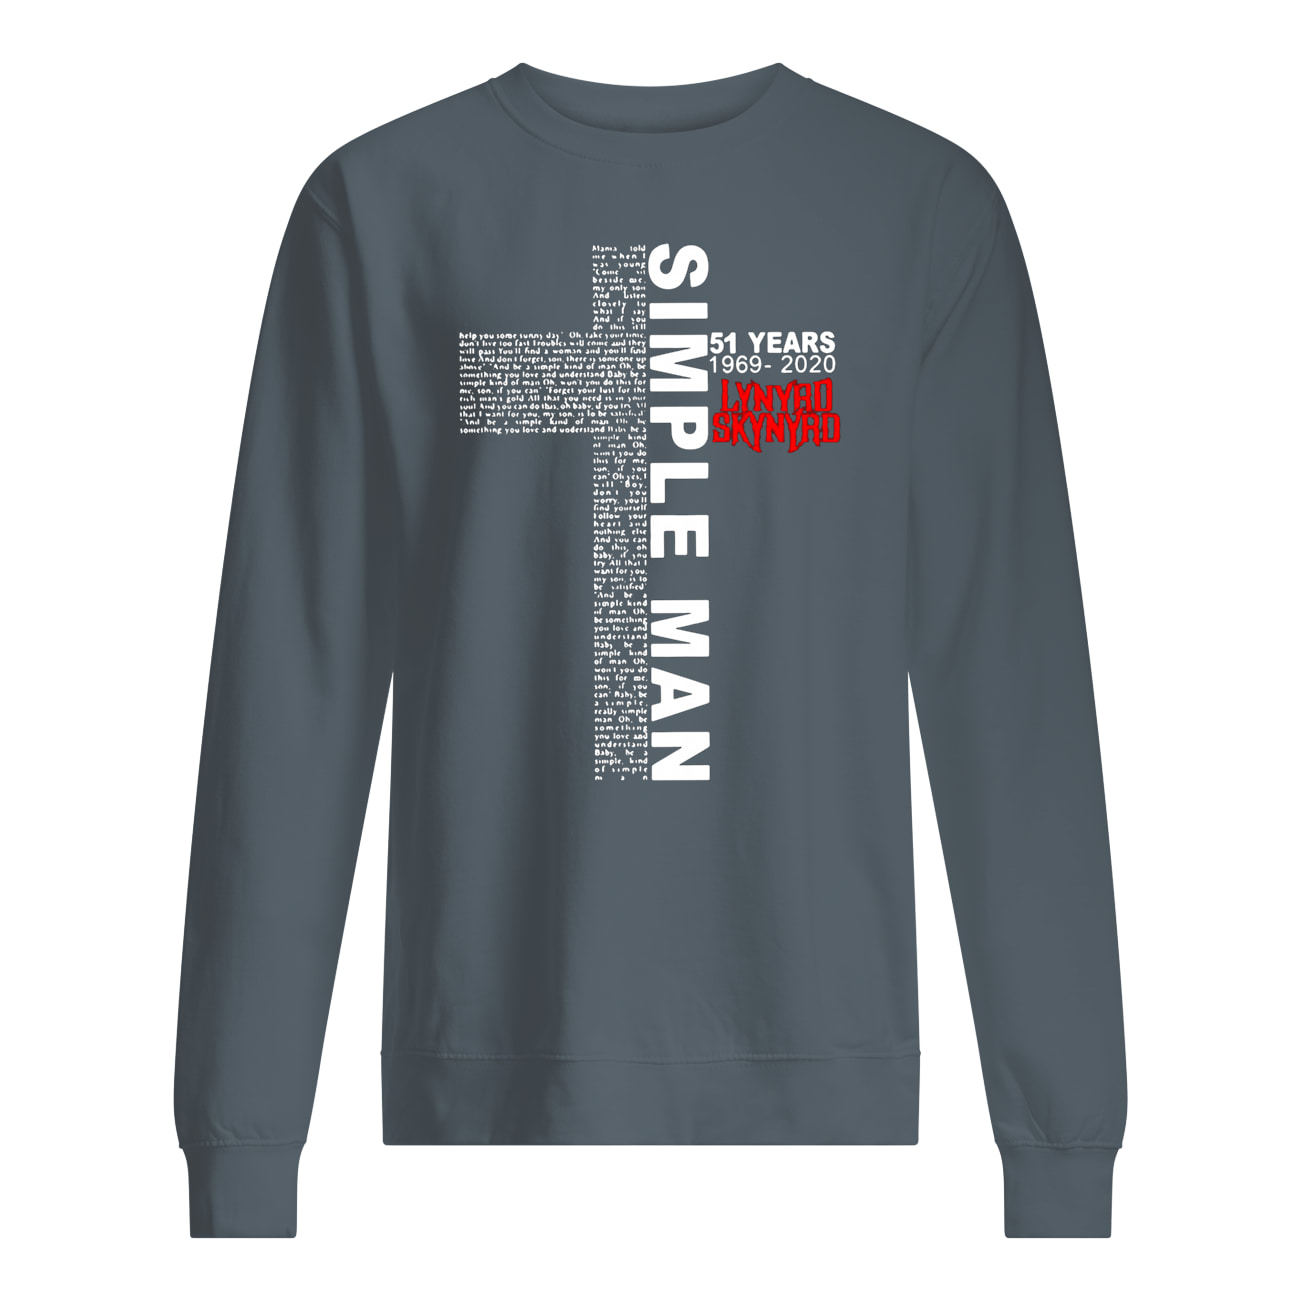 Simple man 51 years 1969-2020 lynyrd skynyrd sweatshirt